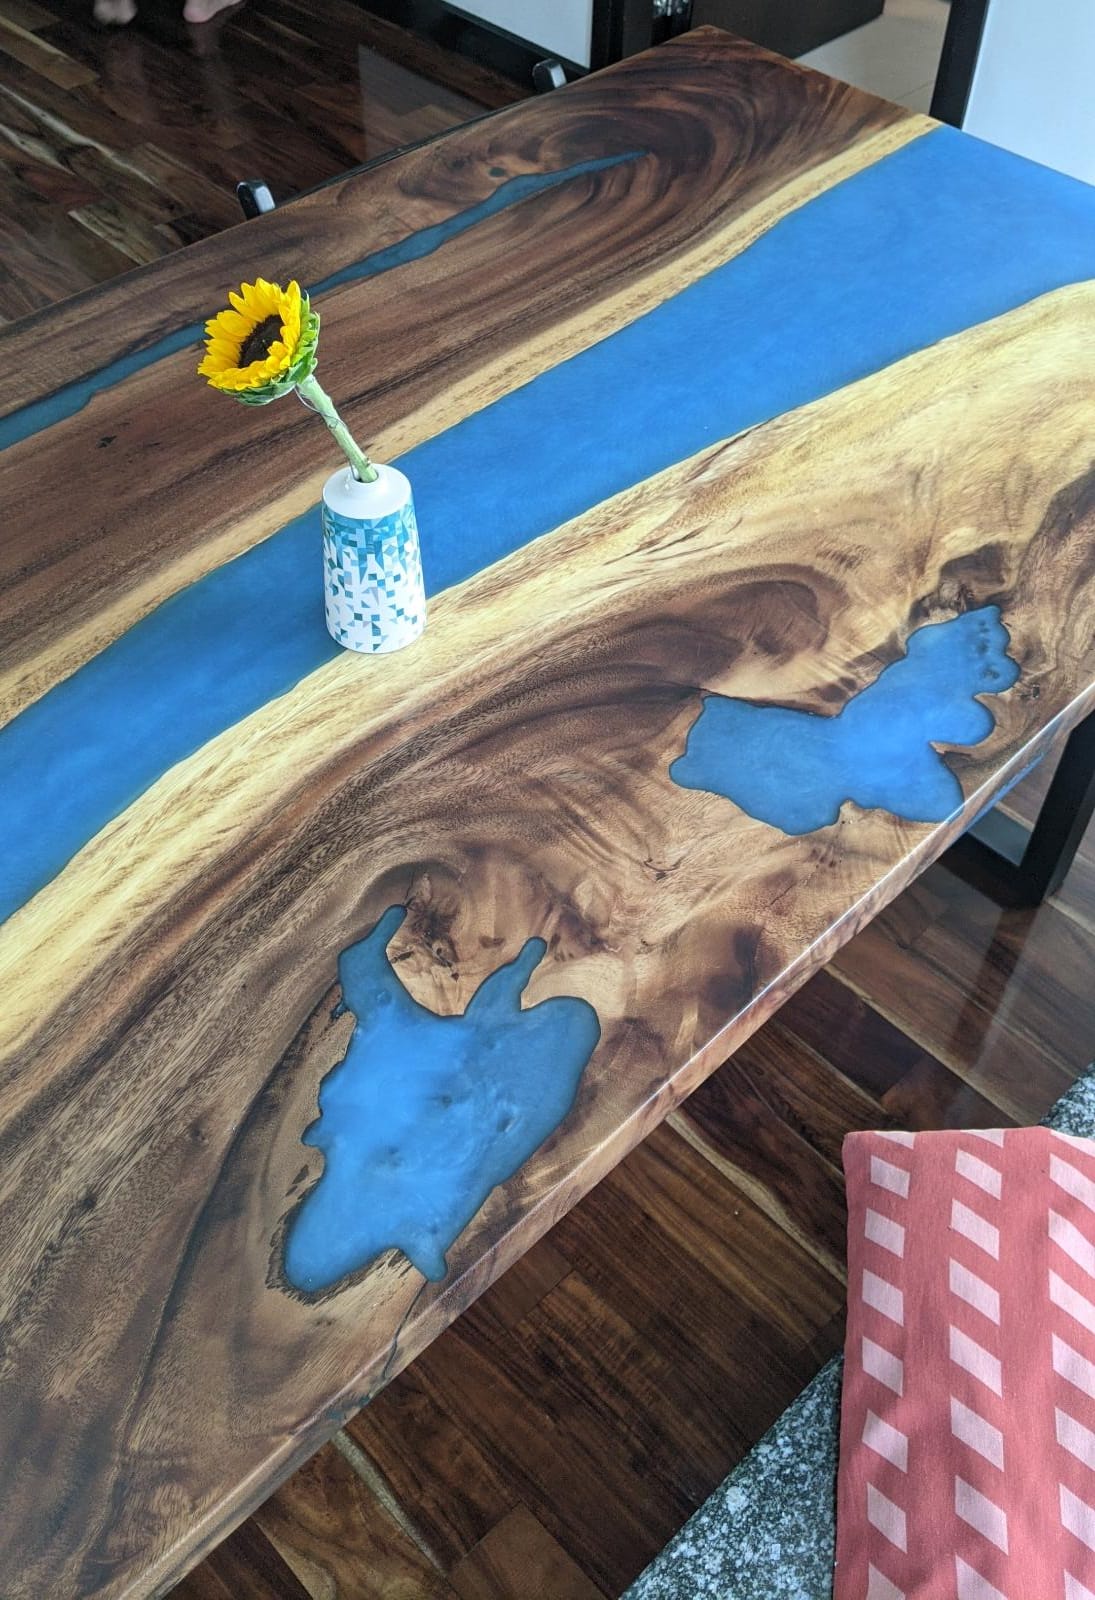 Walnut Wood Epoxy Resin Table with Murky Bright Blue Epoxy – Epoxy & Wood  Limited